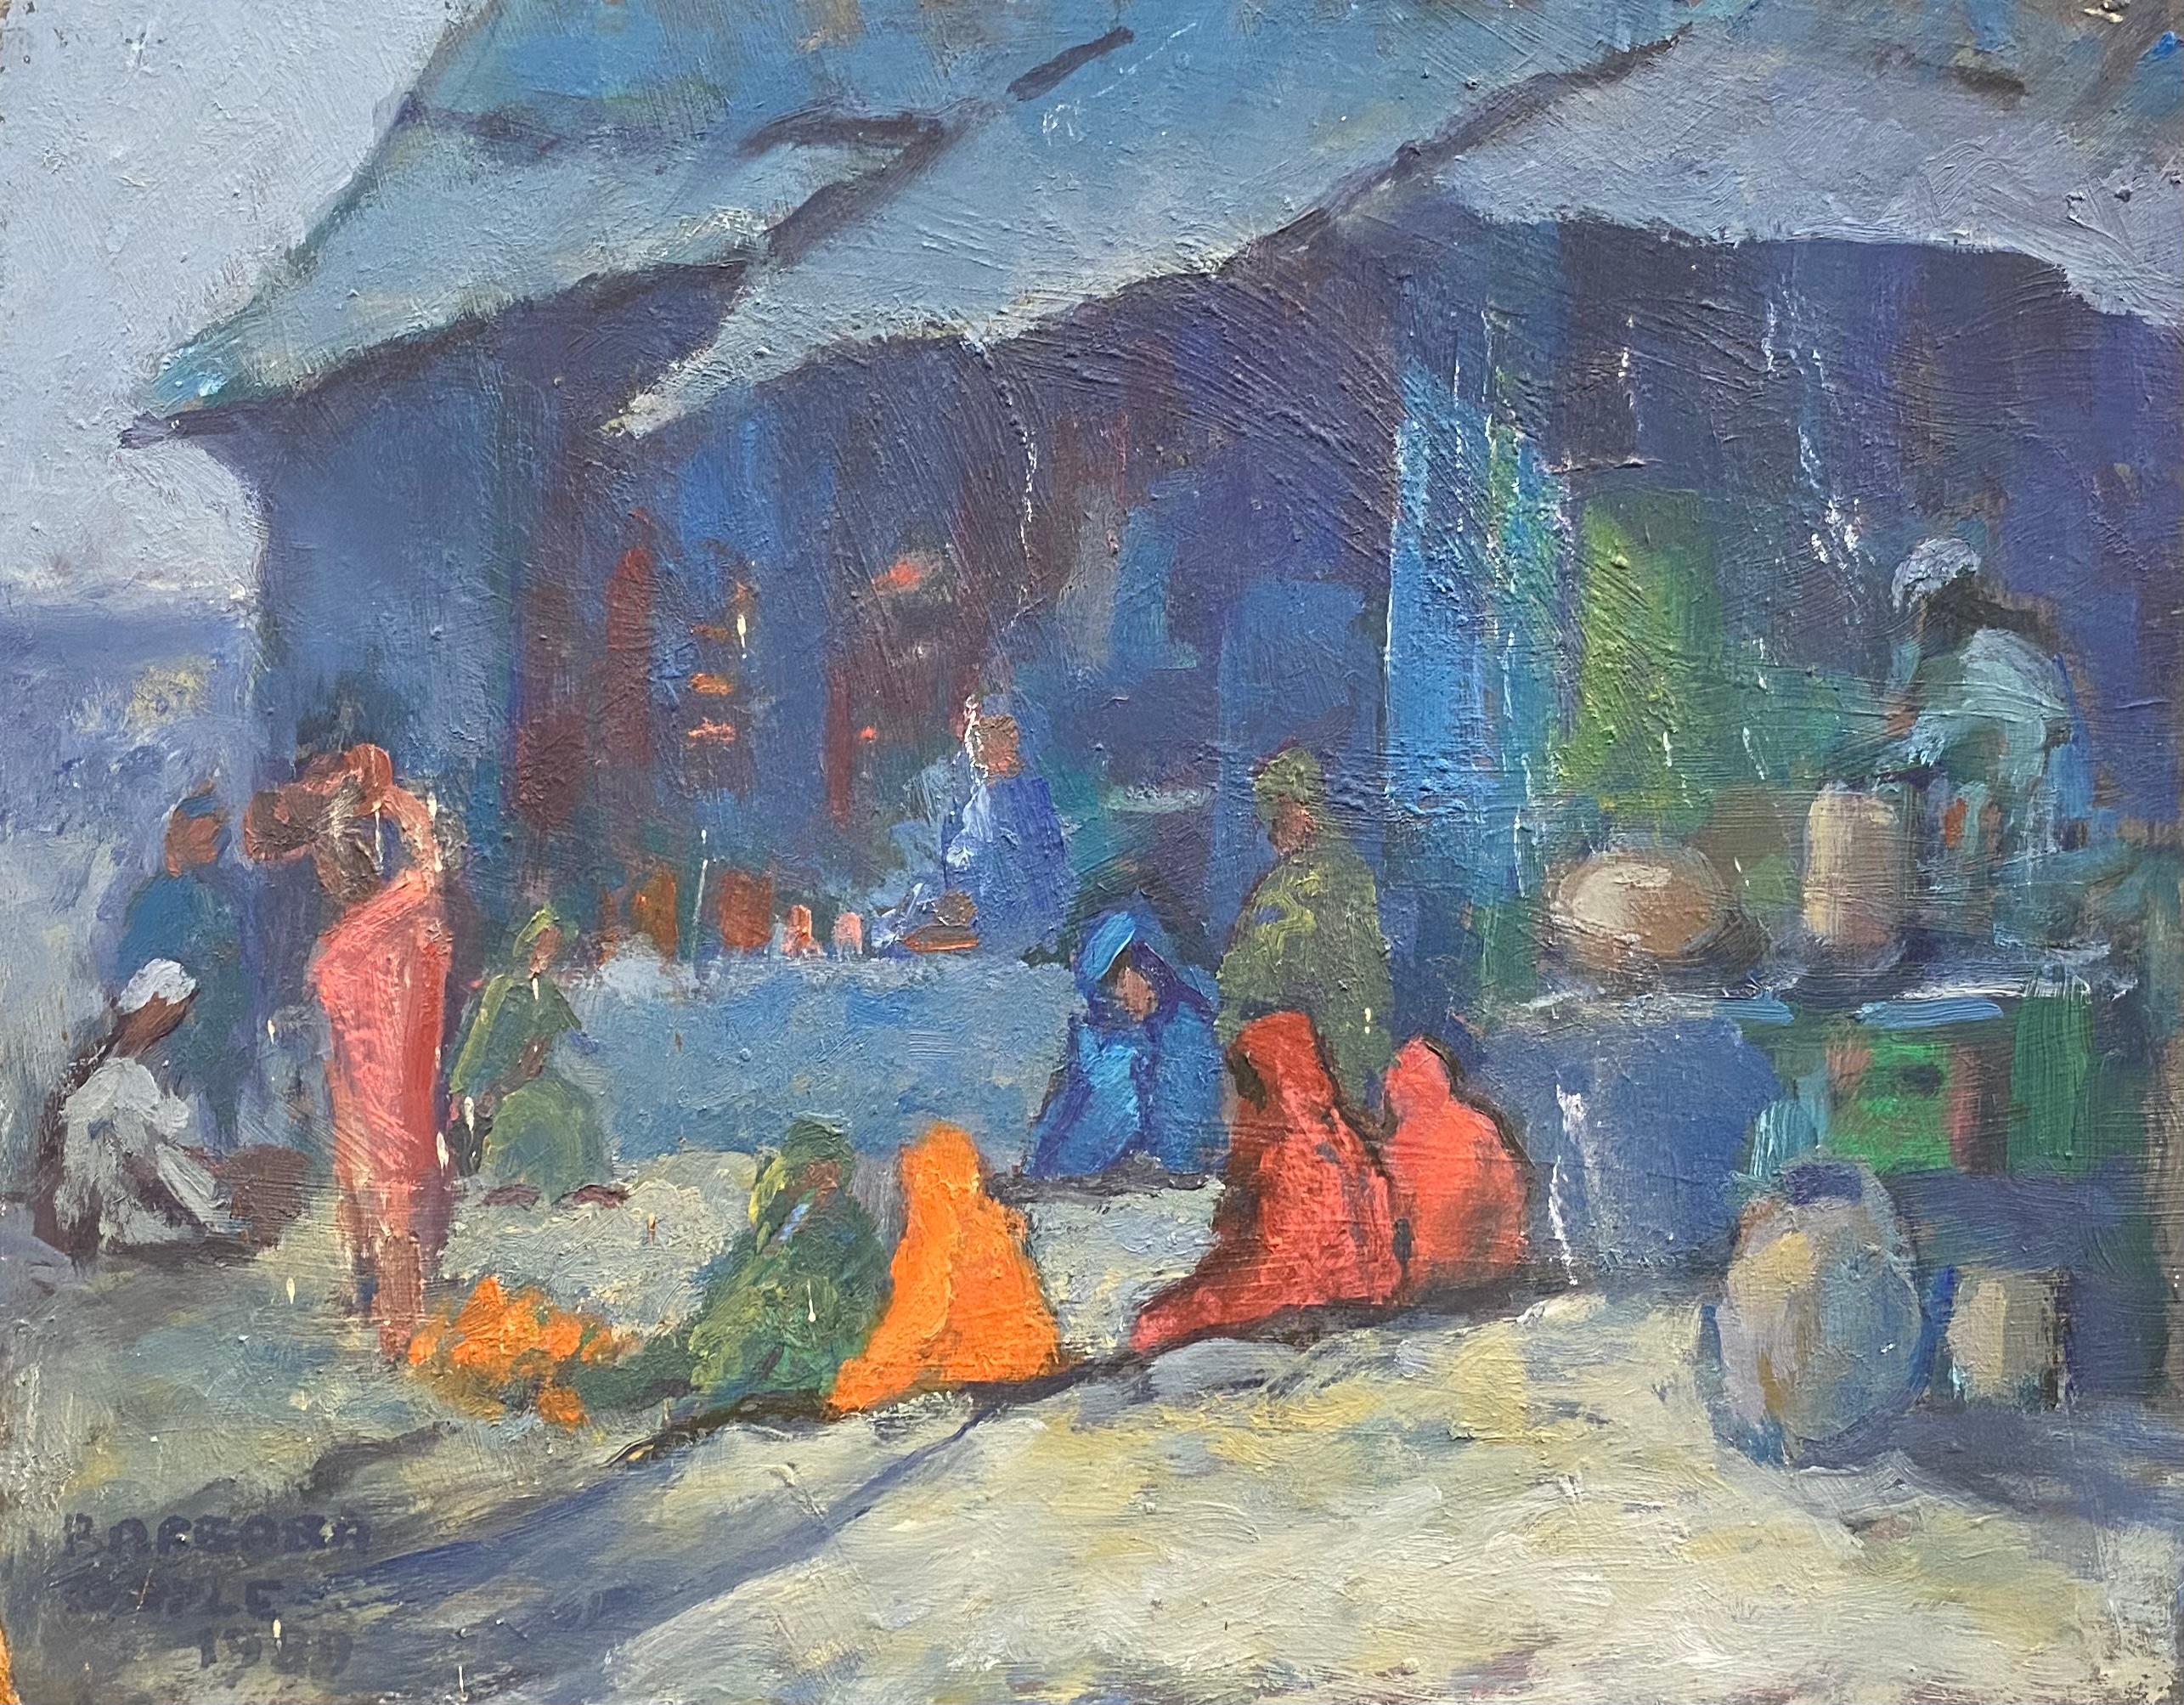 Barbera Doyle Figurative Painting - 1970's Impressionist Oil Painting - Mount Abu Market busy figurative scene